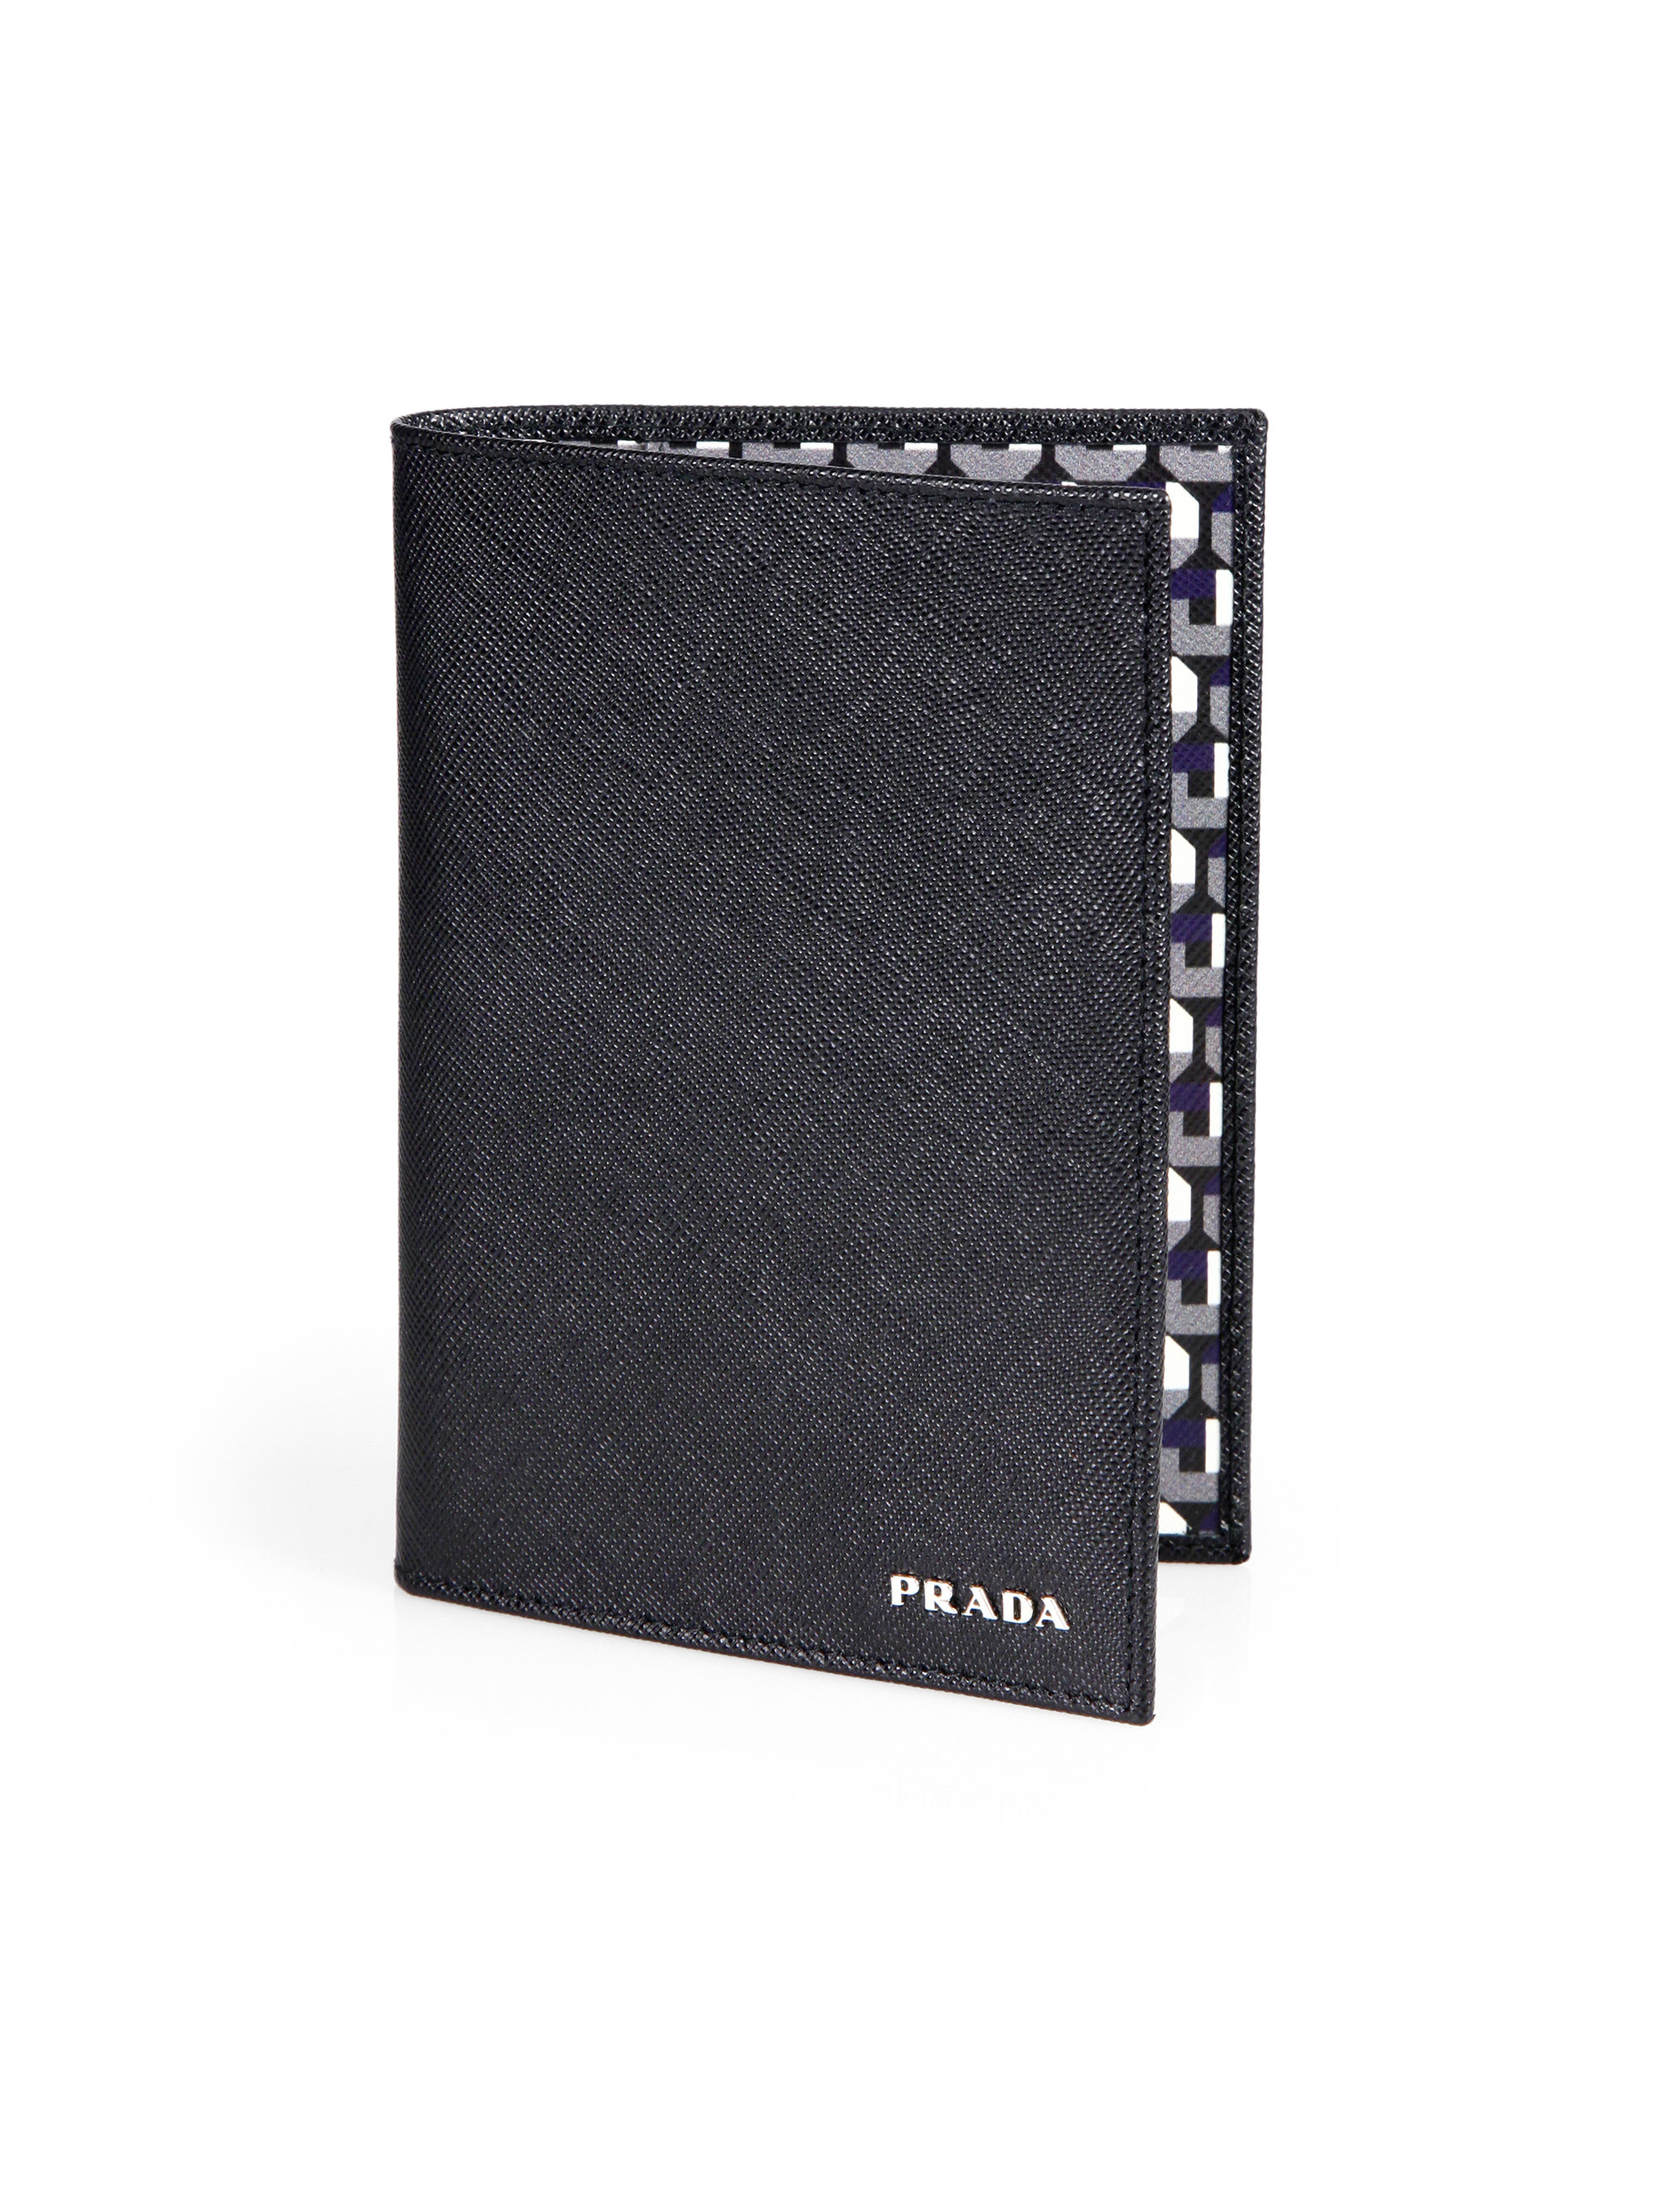 prada passport wallet